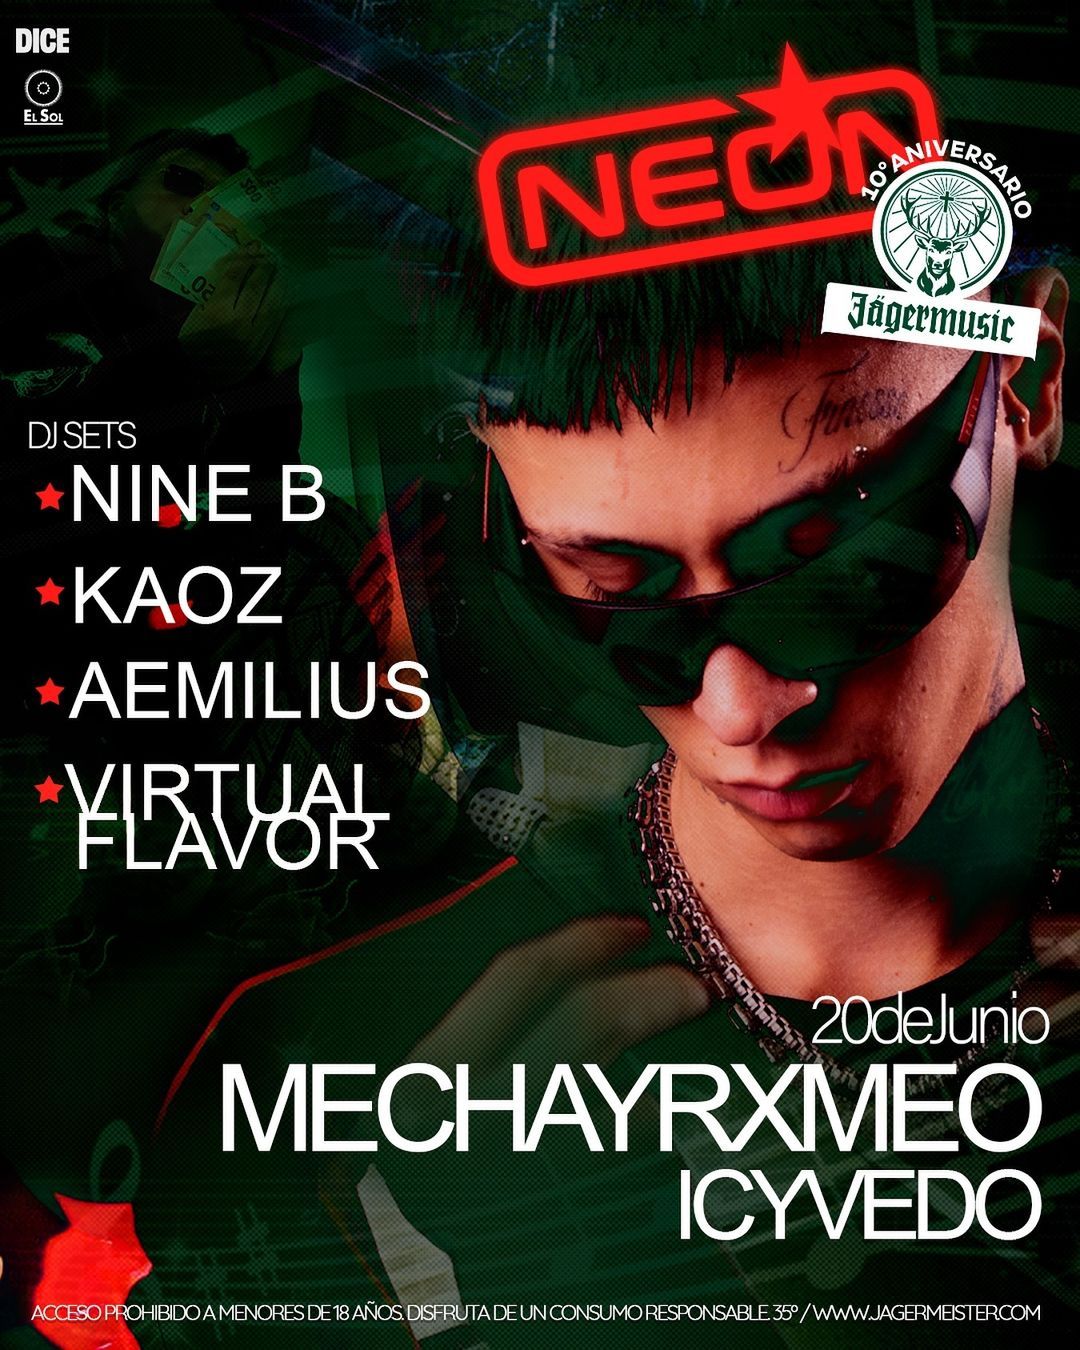 Neón StarClub: Mechayrxmeo & Icy vedo (showcases) + Nine B + Aemilius + Kaoz +  Virtual Flavour